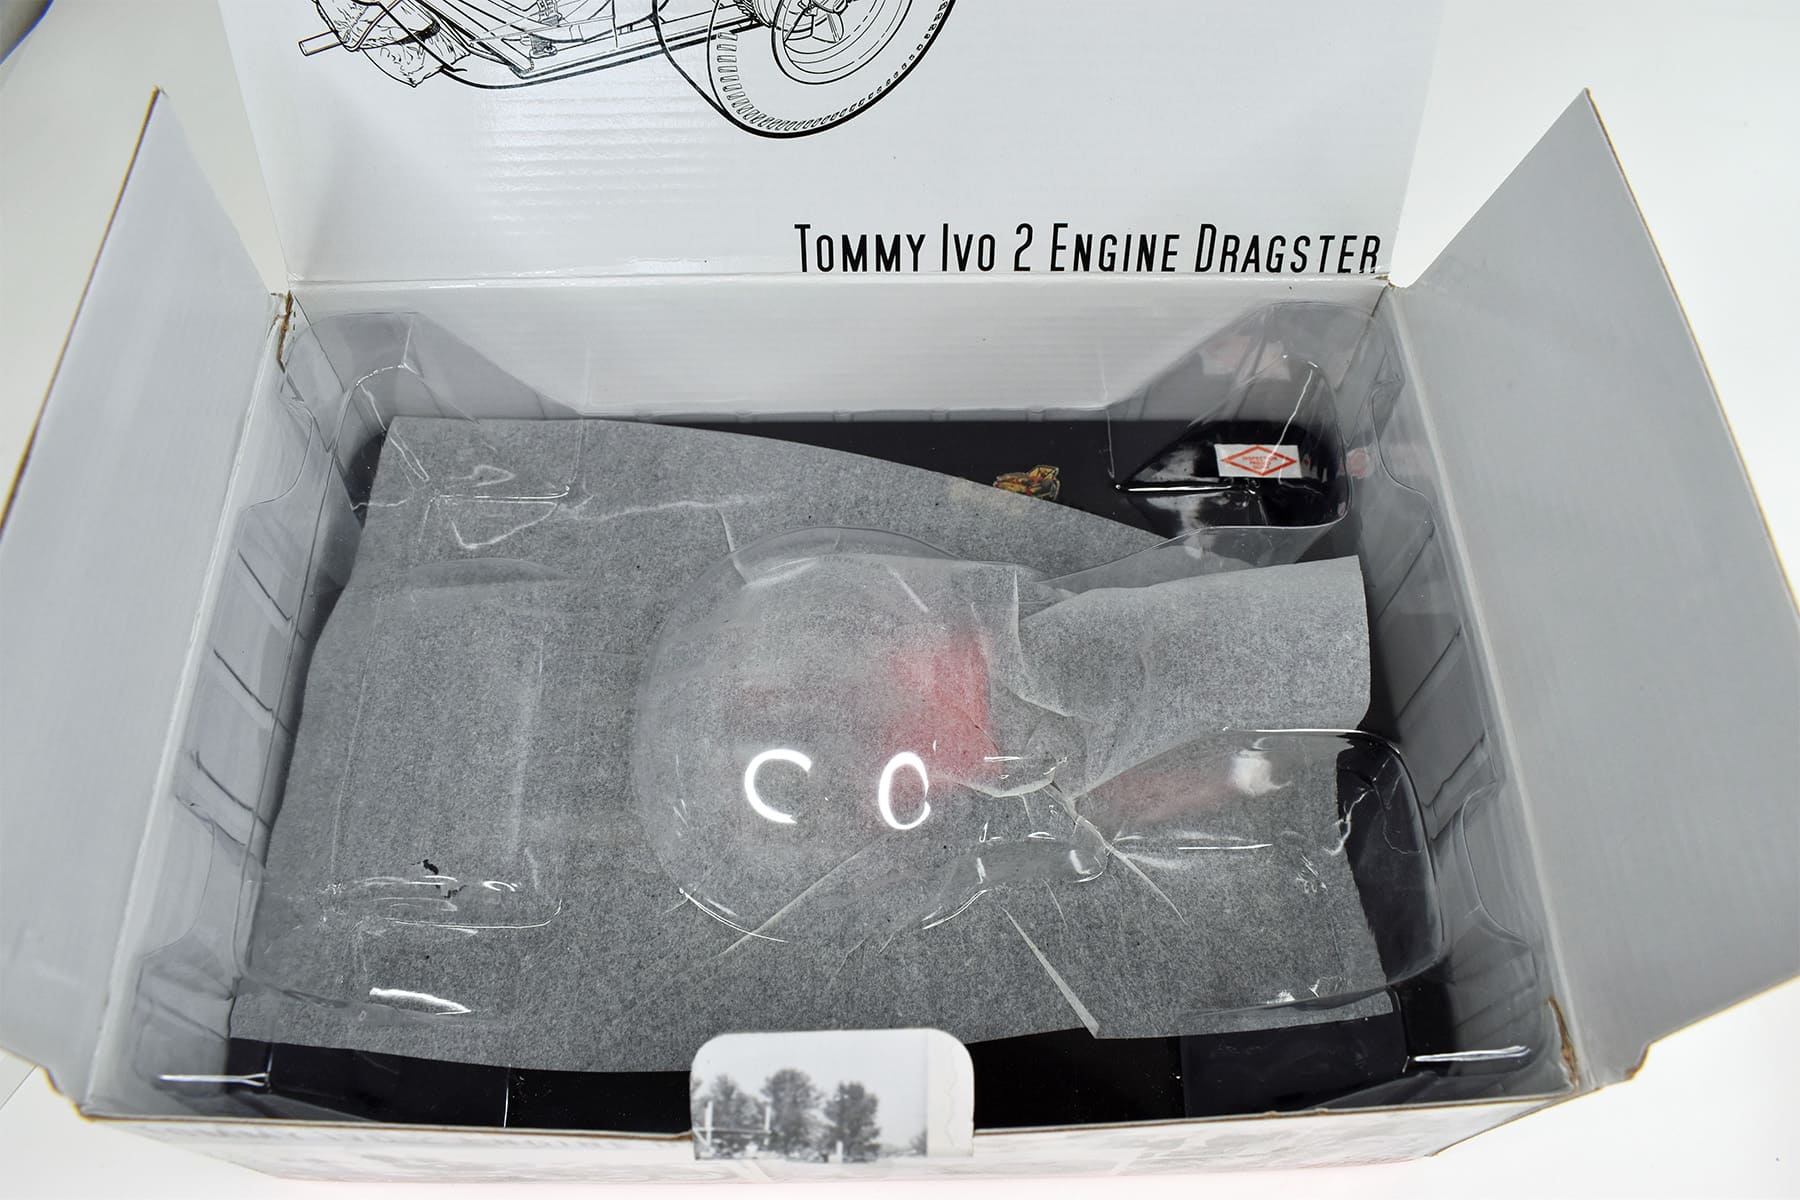 Tommy Ivo 2 engine dragster - Vintage Toys